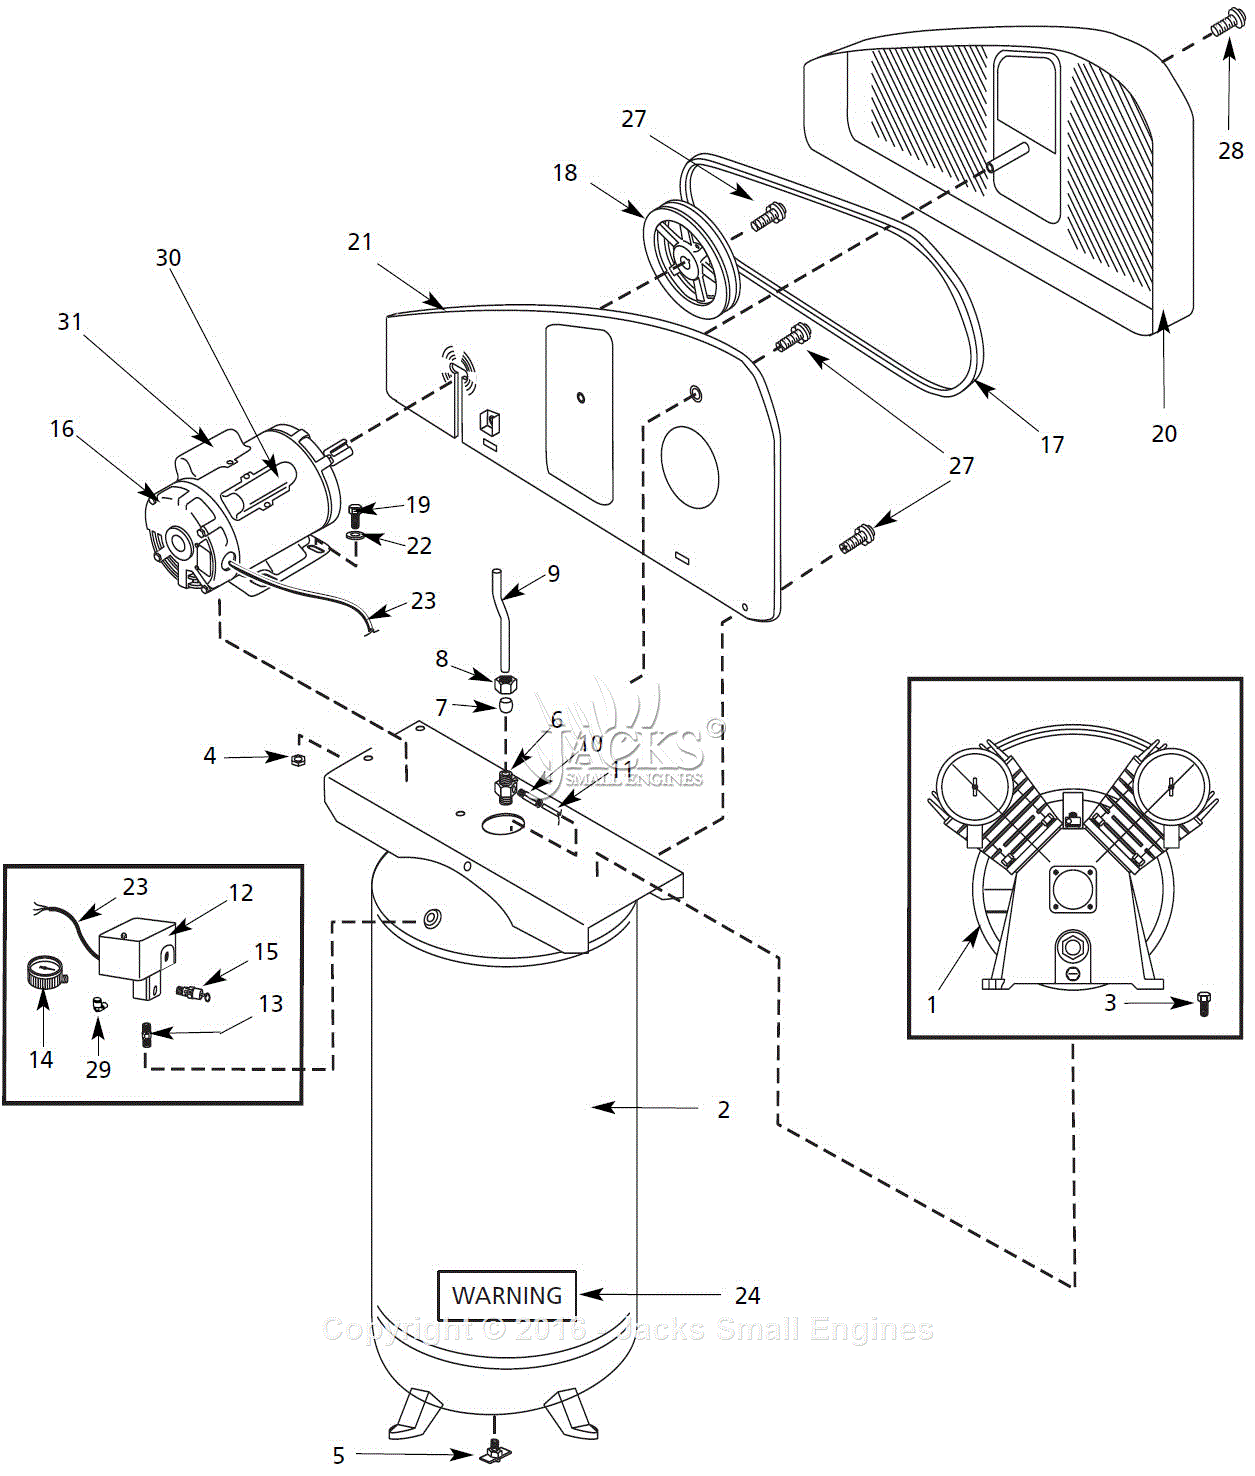 https://az417944.vo.msecnd.net/diagrams/manufacturer/campbell-hausfeld/air-compressor/vh631400aj/air-compressor-parts/diagram_6.gif